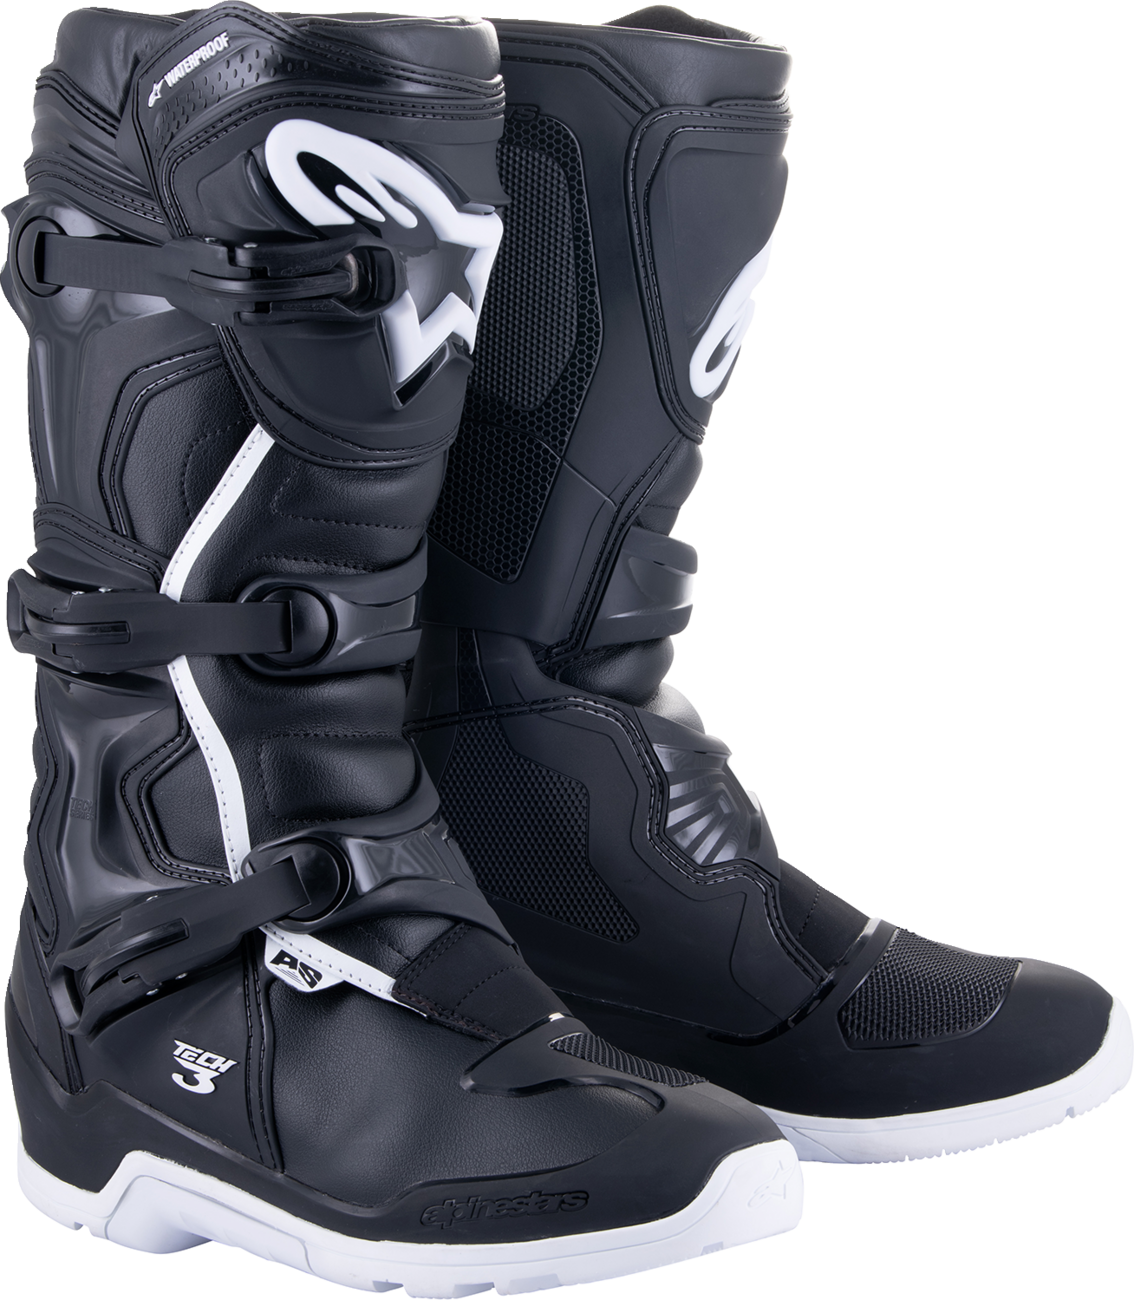 ALPINESTARS Tech 3 Enduro Waterproof Boots - Black/White - US 13/EU 48 2013324-12-13